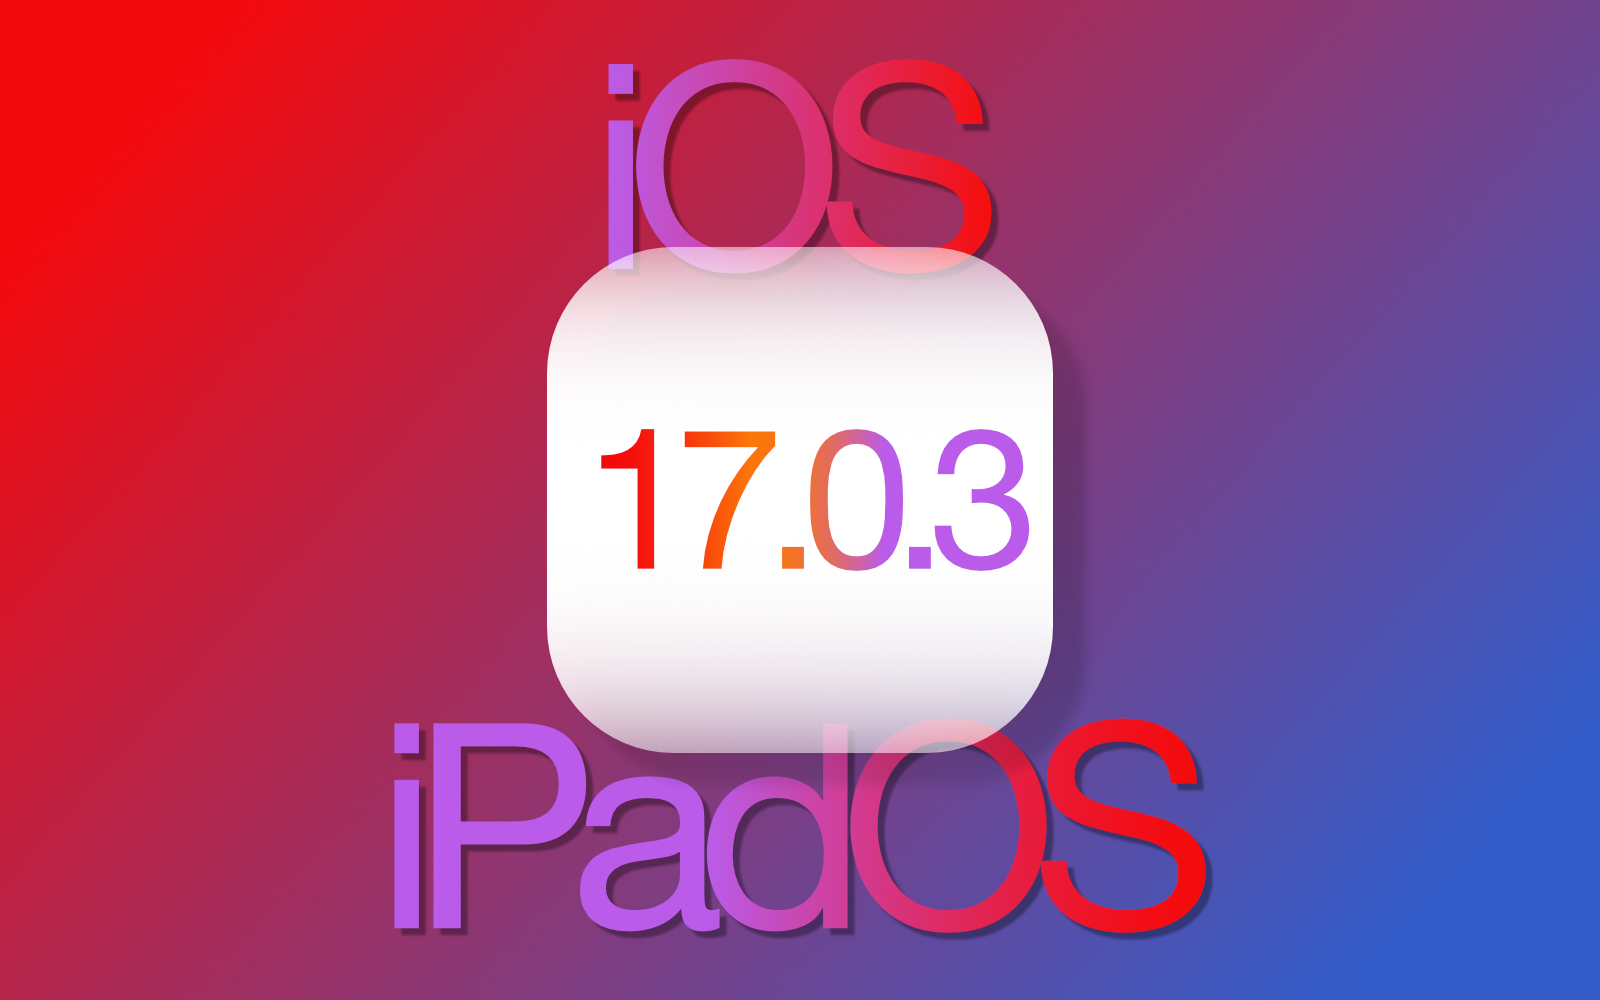 Ios17 0 3 update release